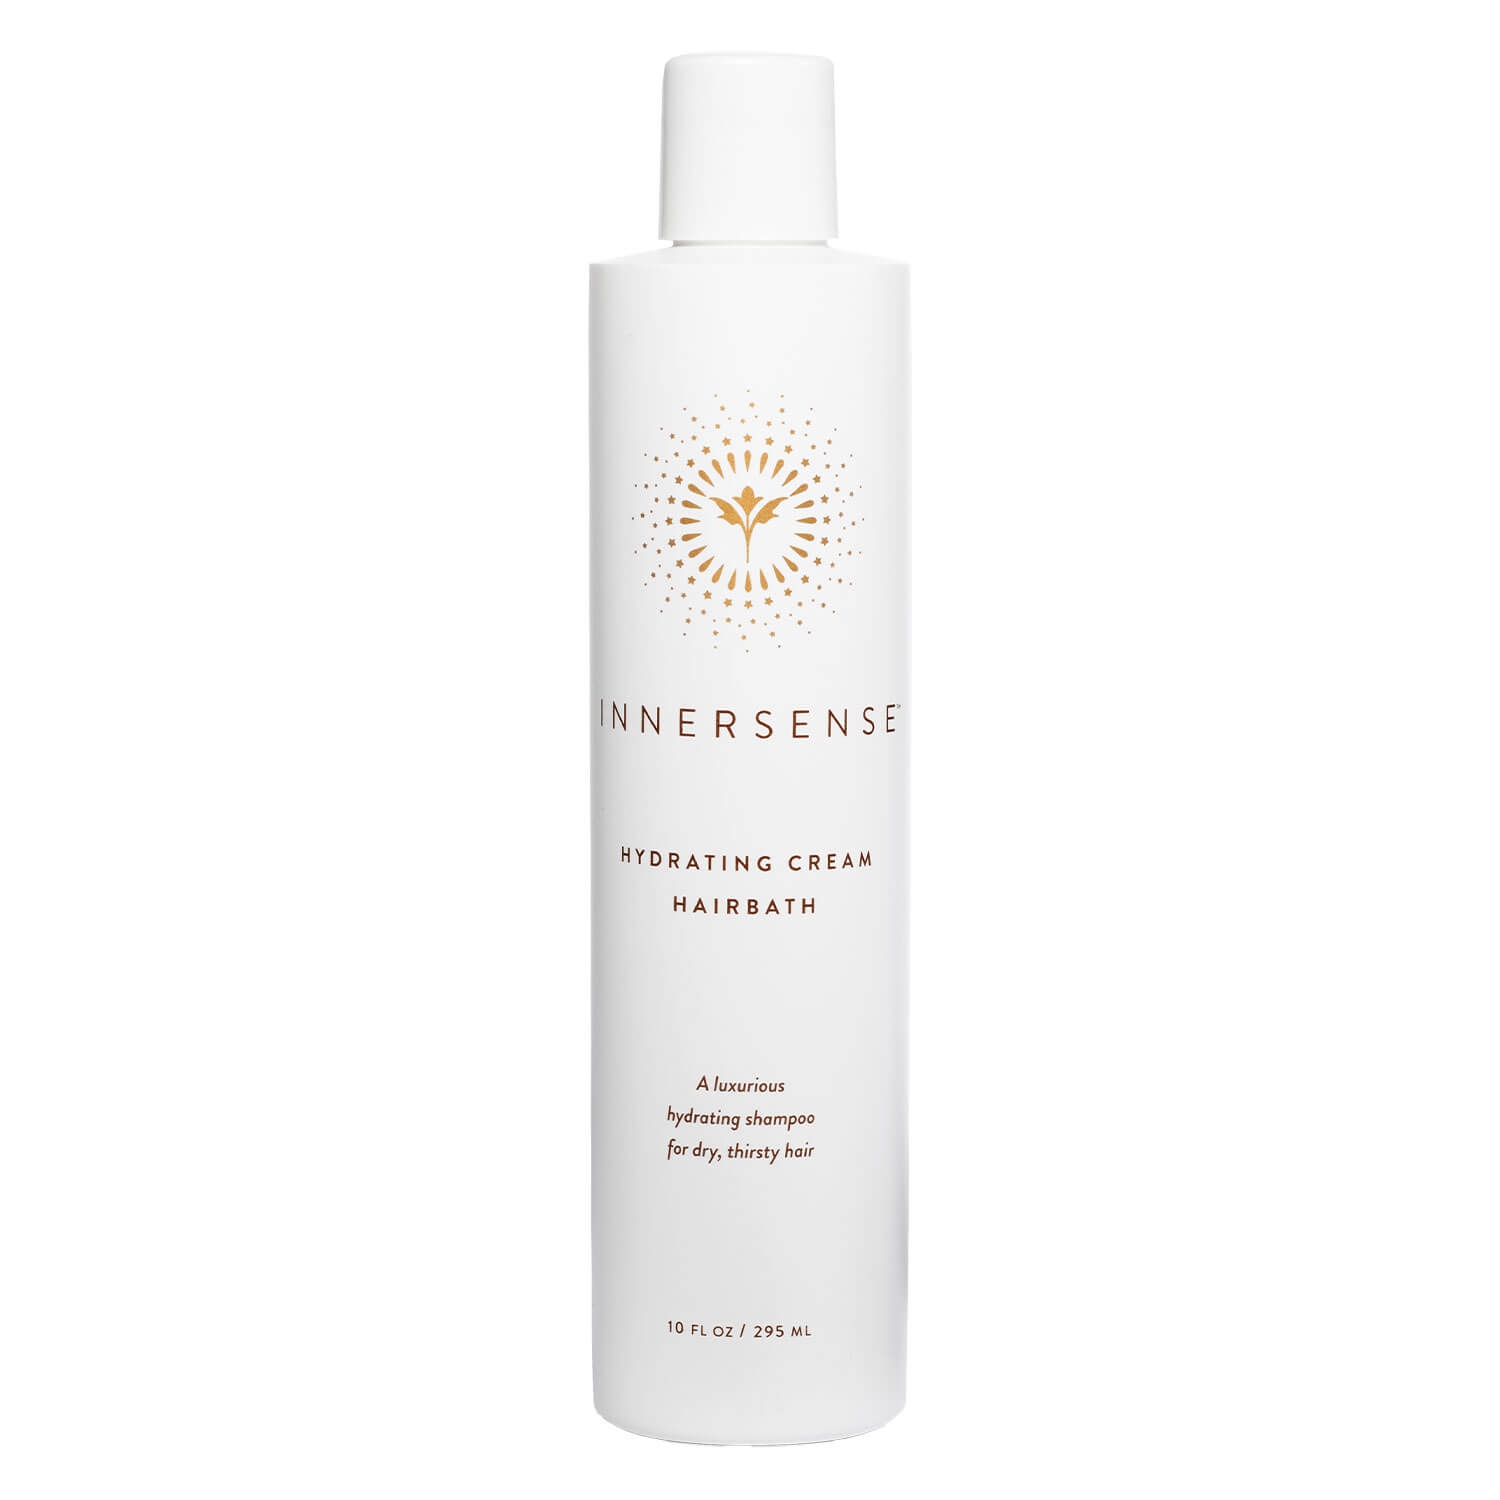 Product image from Innersense - Hydrating Cream Hairbath